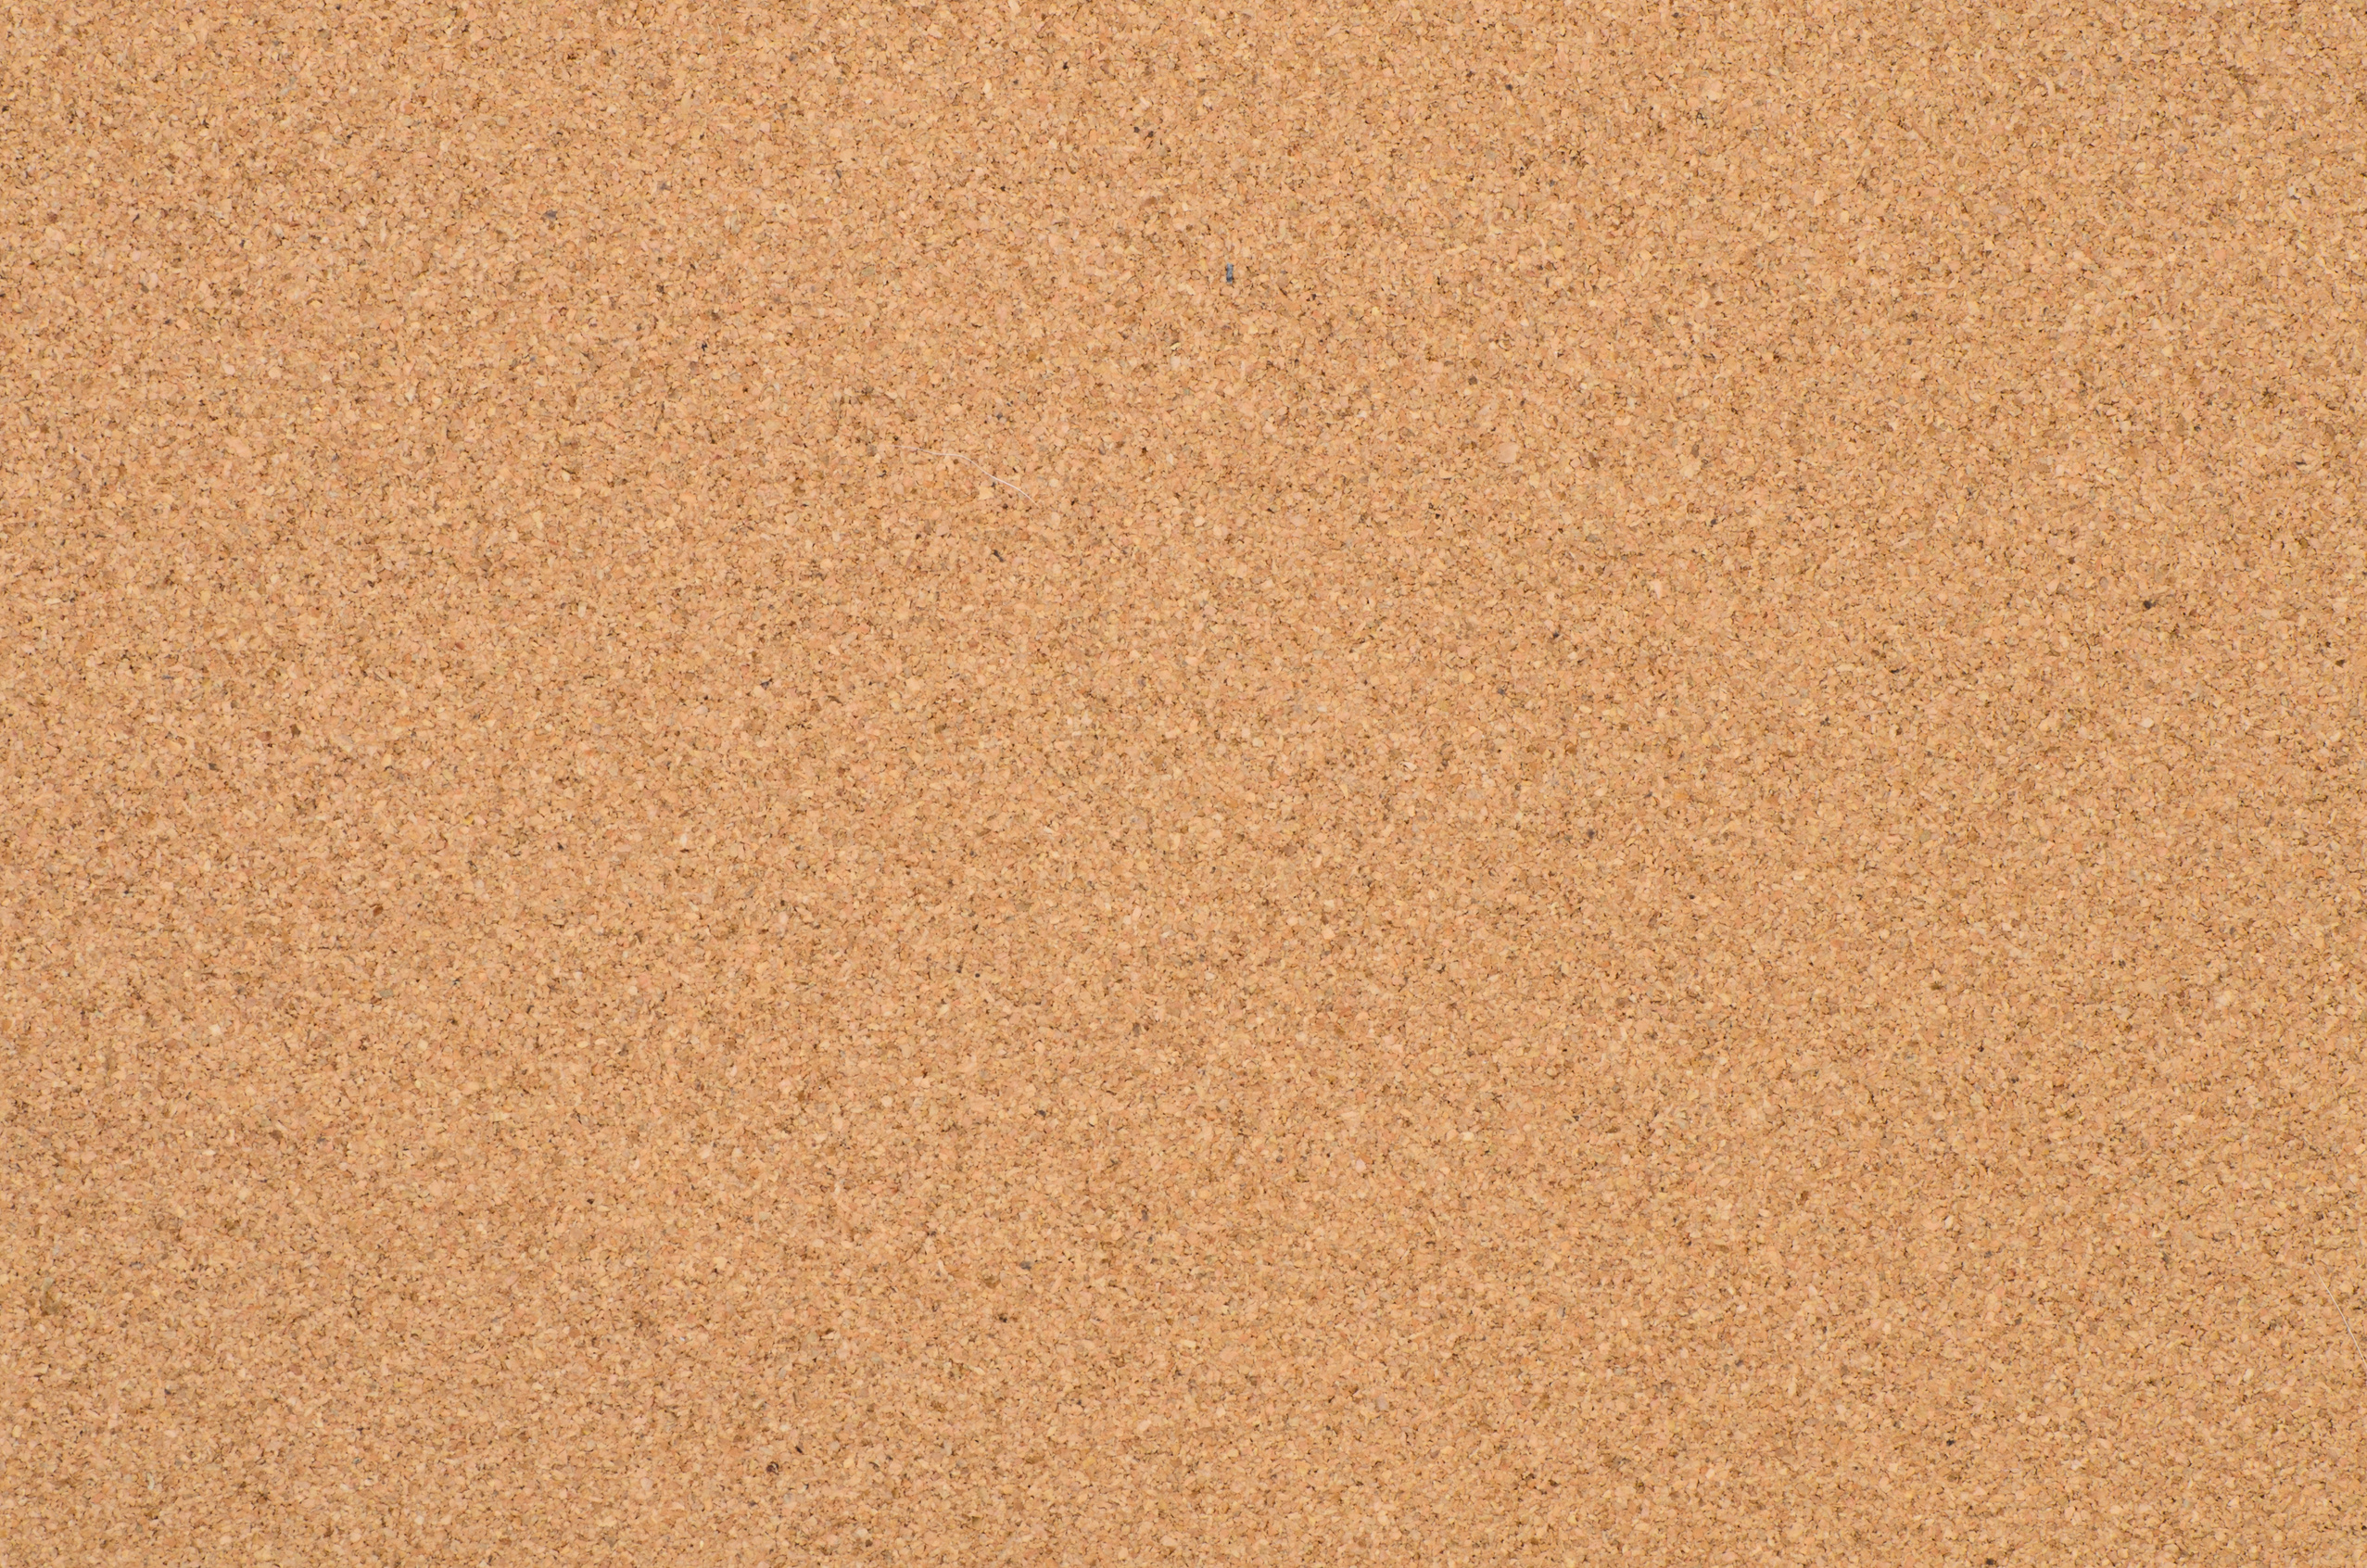 cork board texture